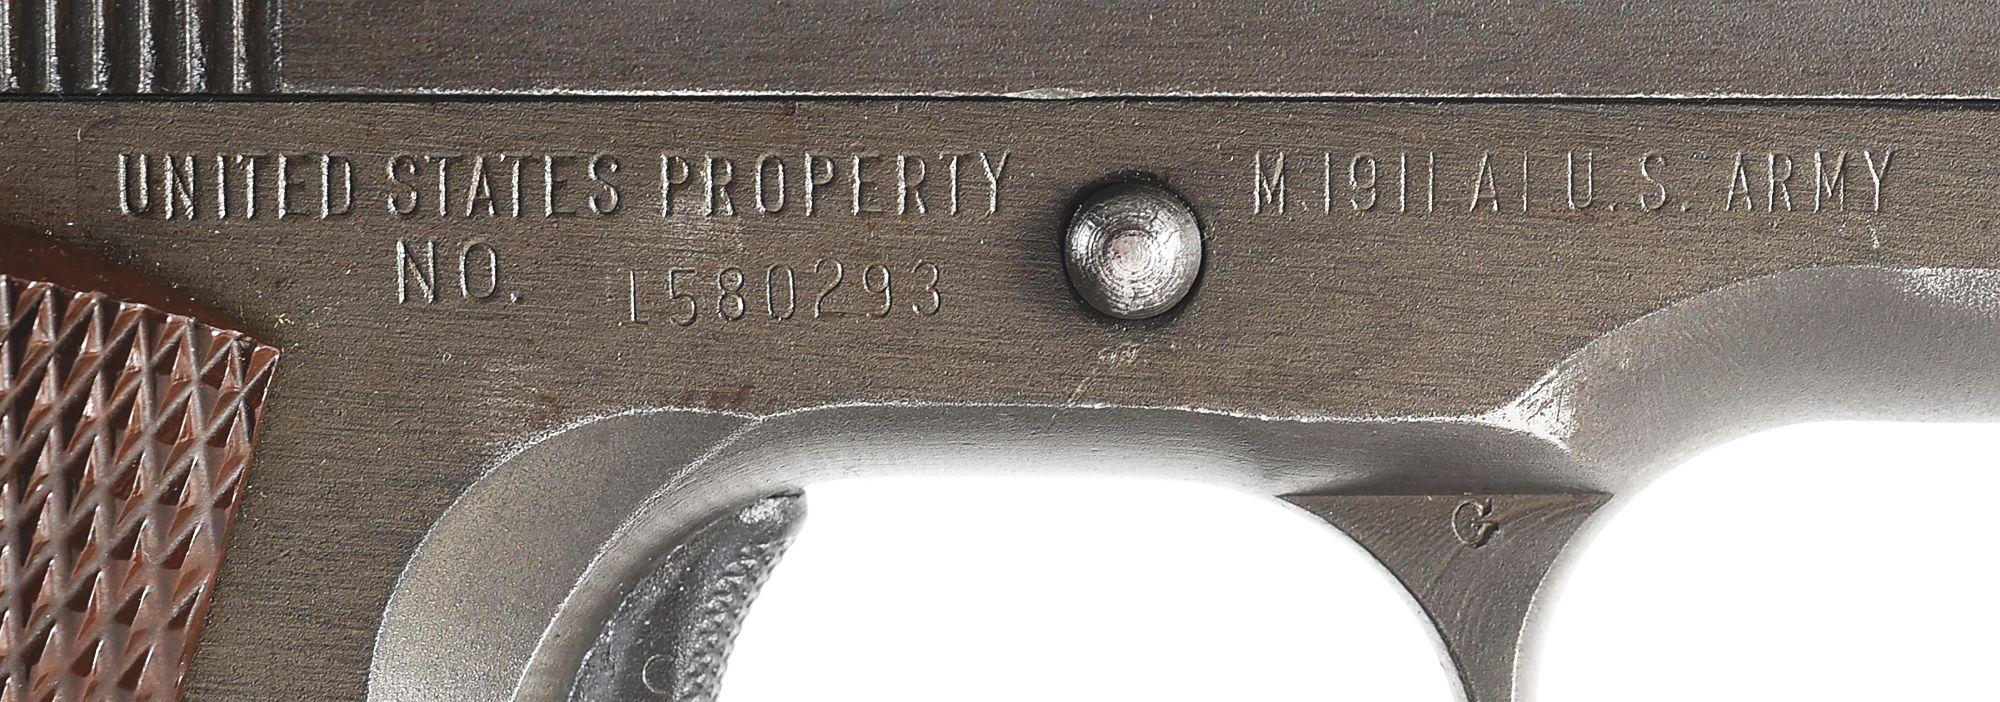 (C) REMINGTON RAND M1911A1 .45 ACP SEMI-AUTOMATIC PISTOL.